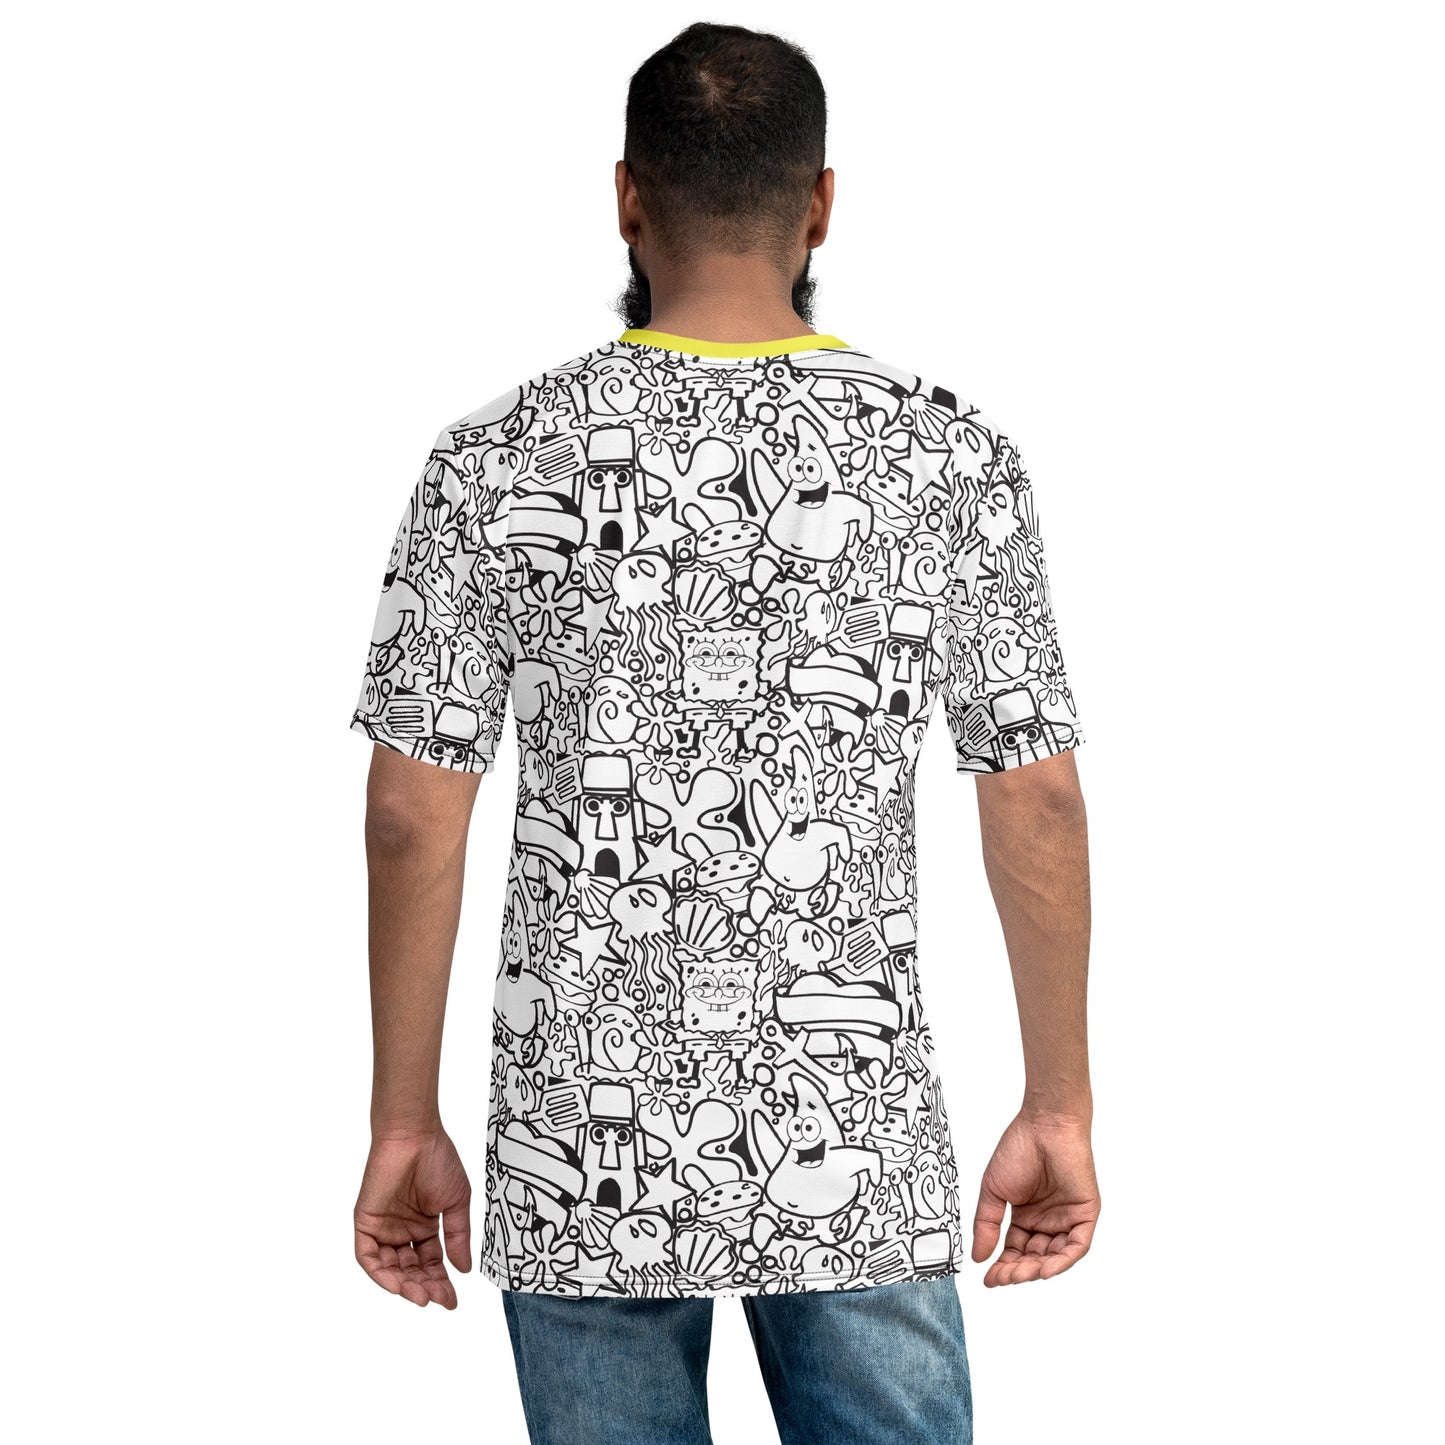 SpongeBob Sketch T-Shirt